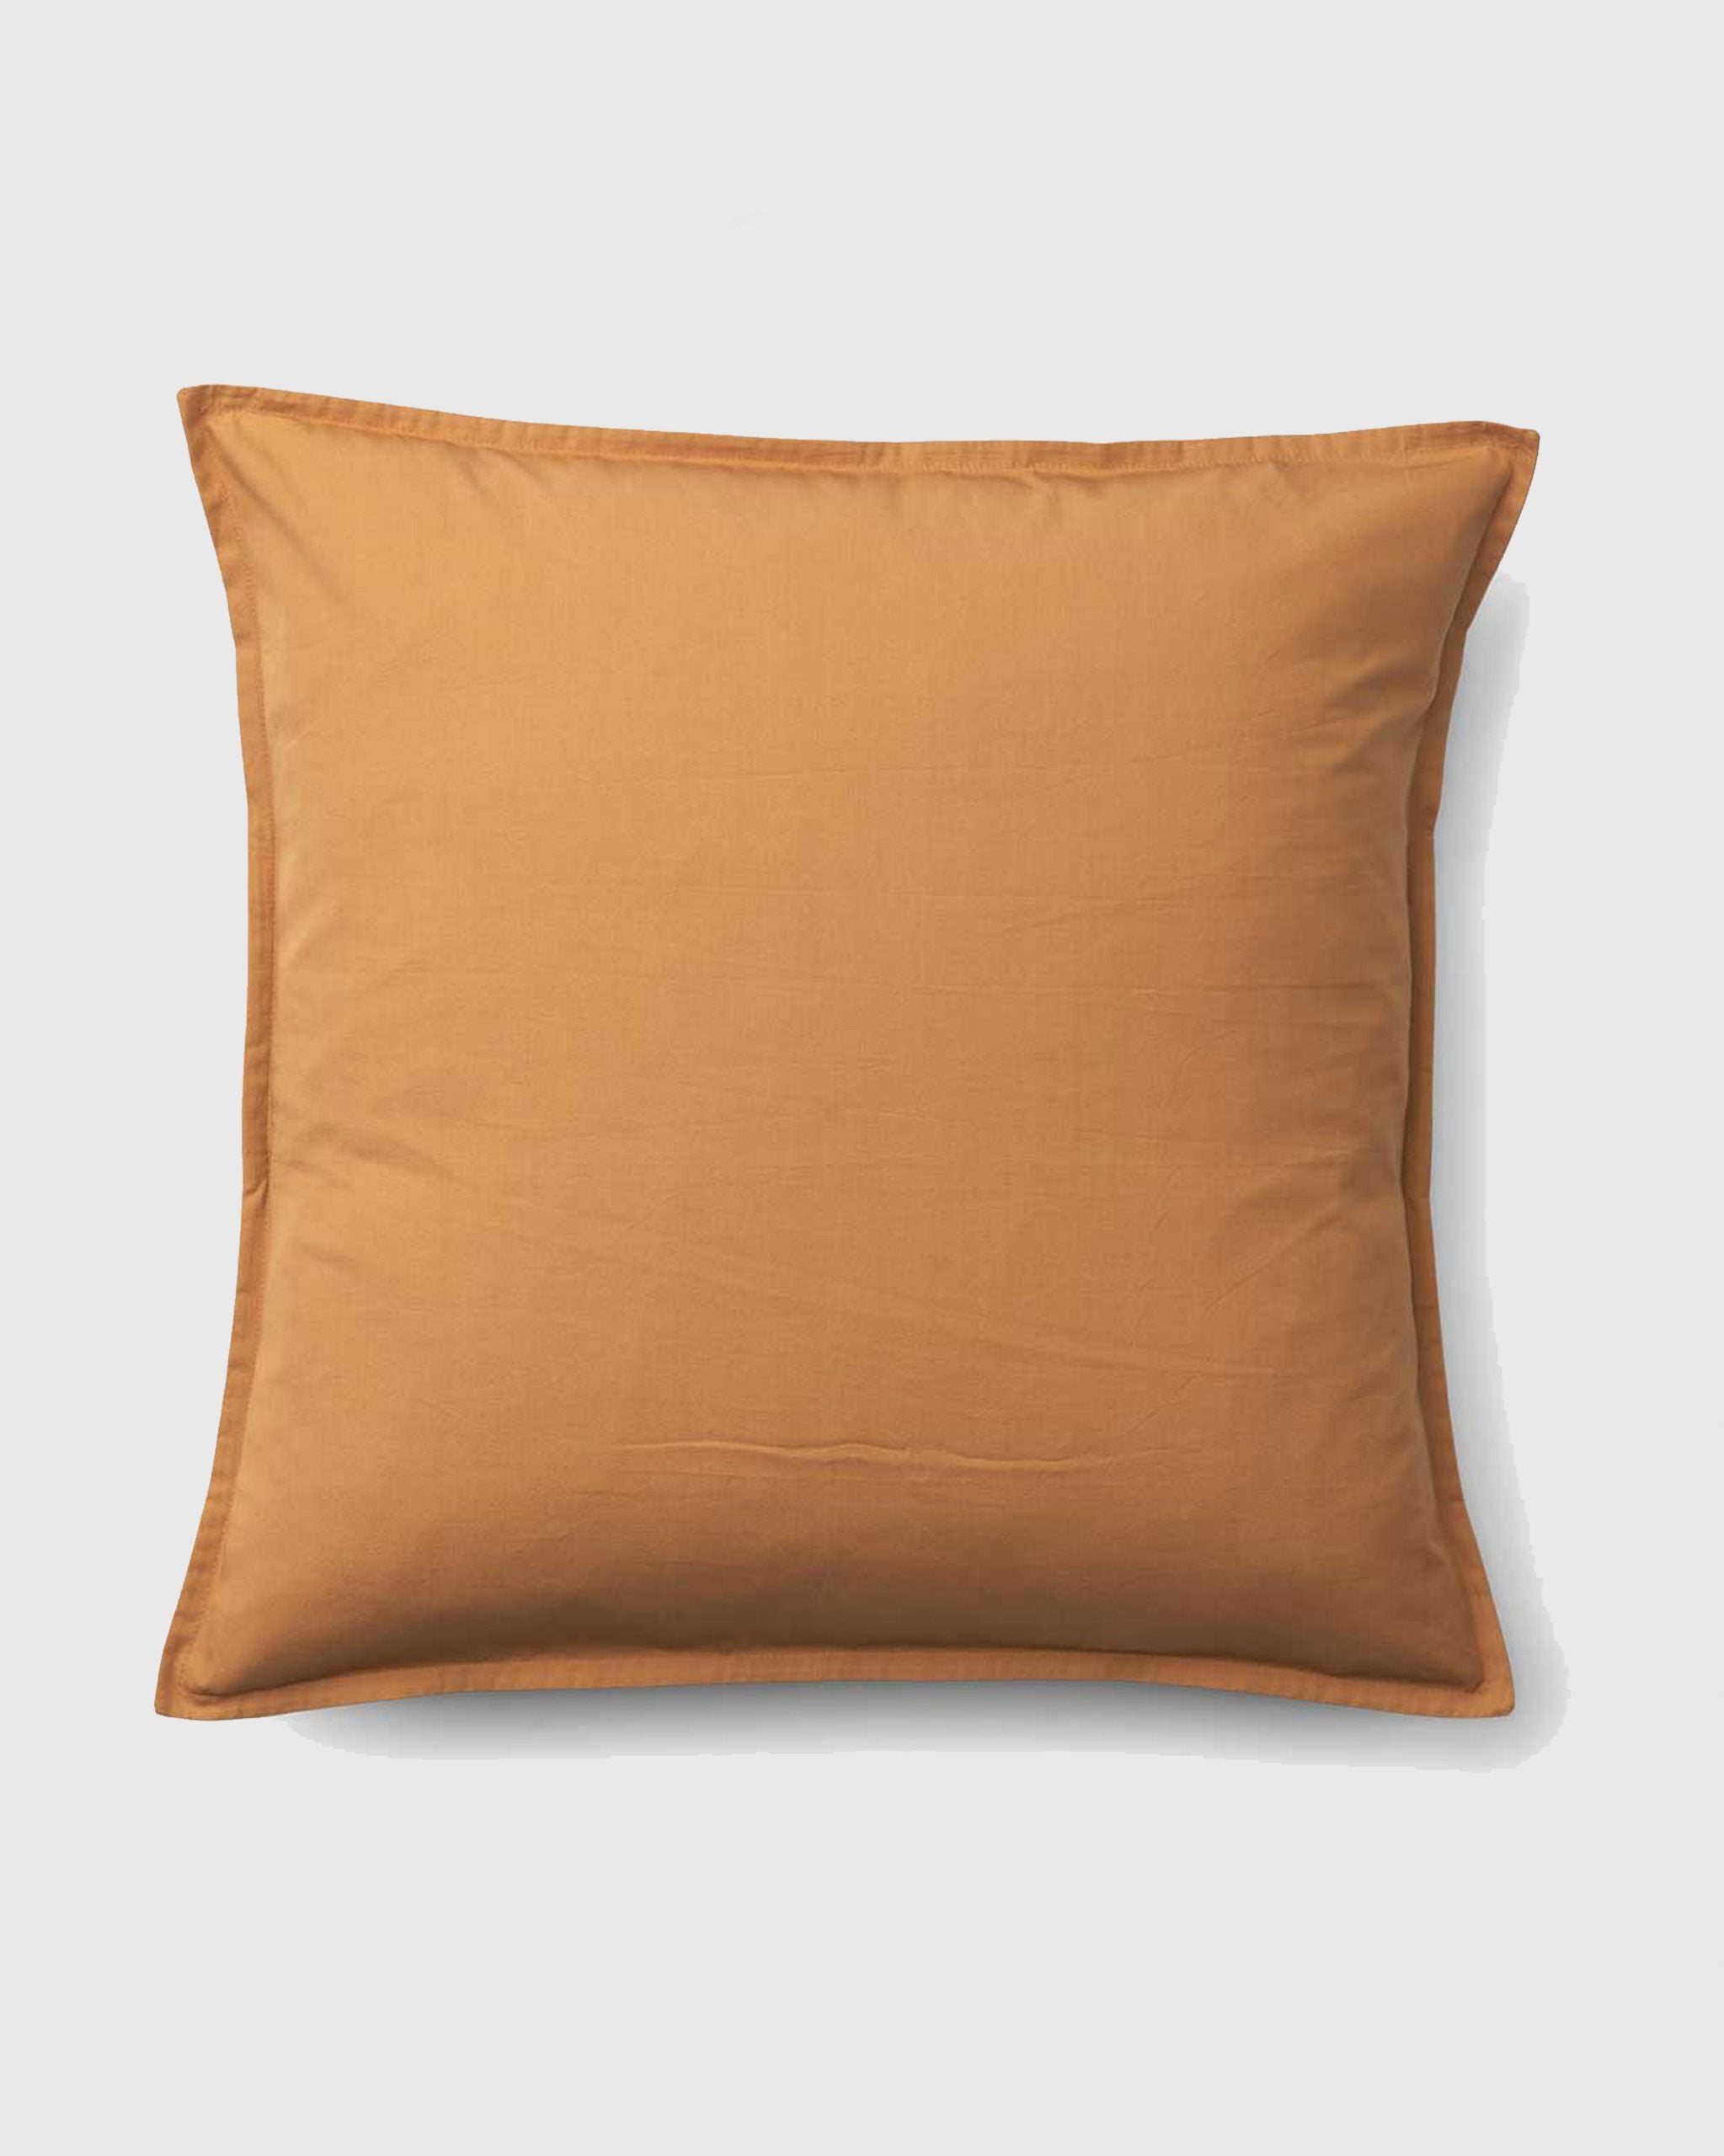 Bongusta Papelain Pillow, Sudan Brown